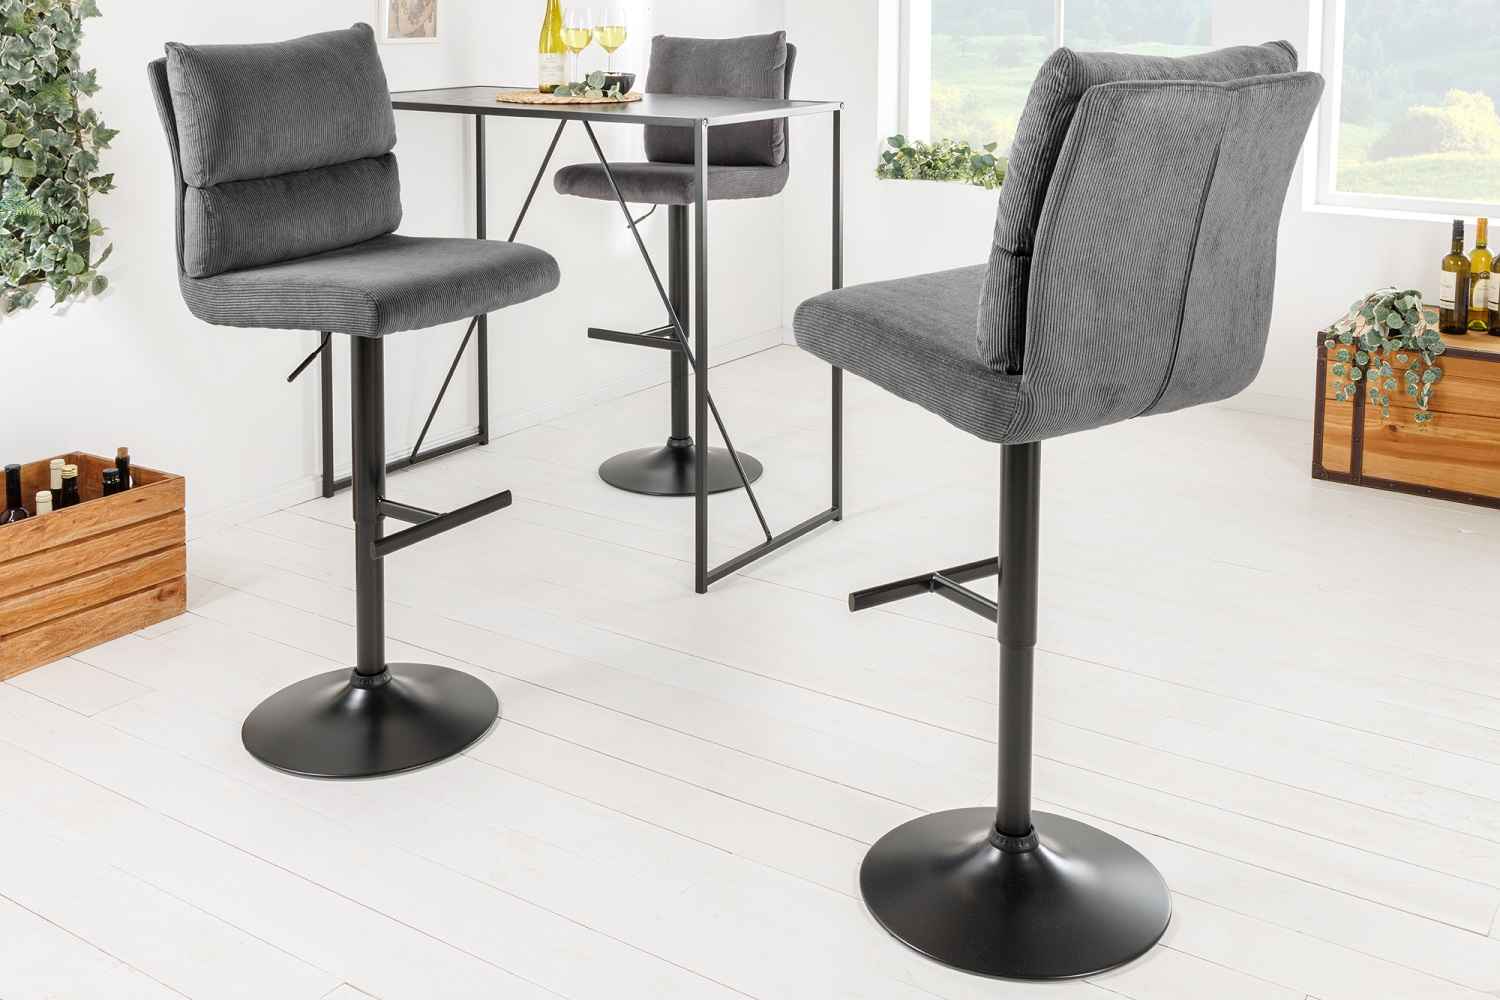 Designová barová otočná židle Frank šedý manšestr